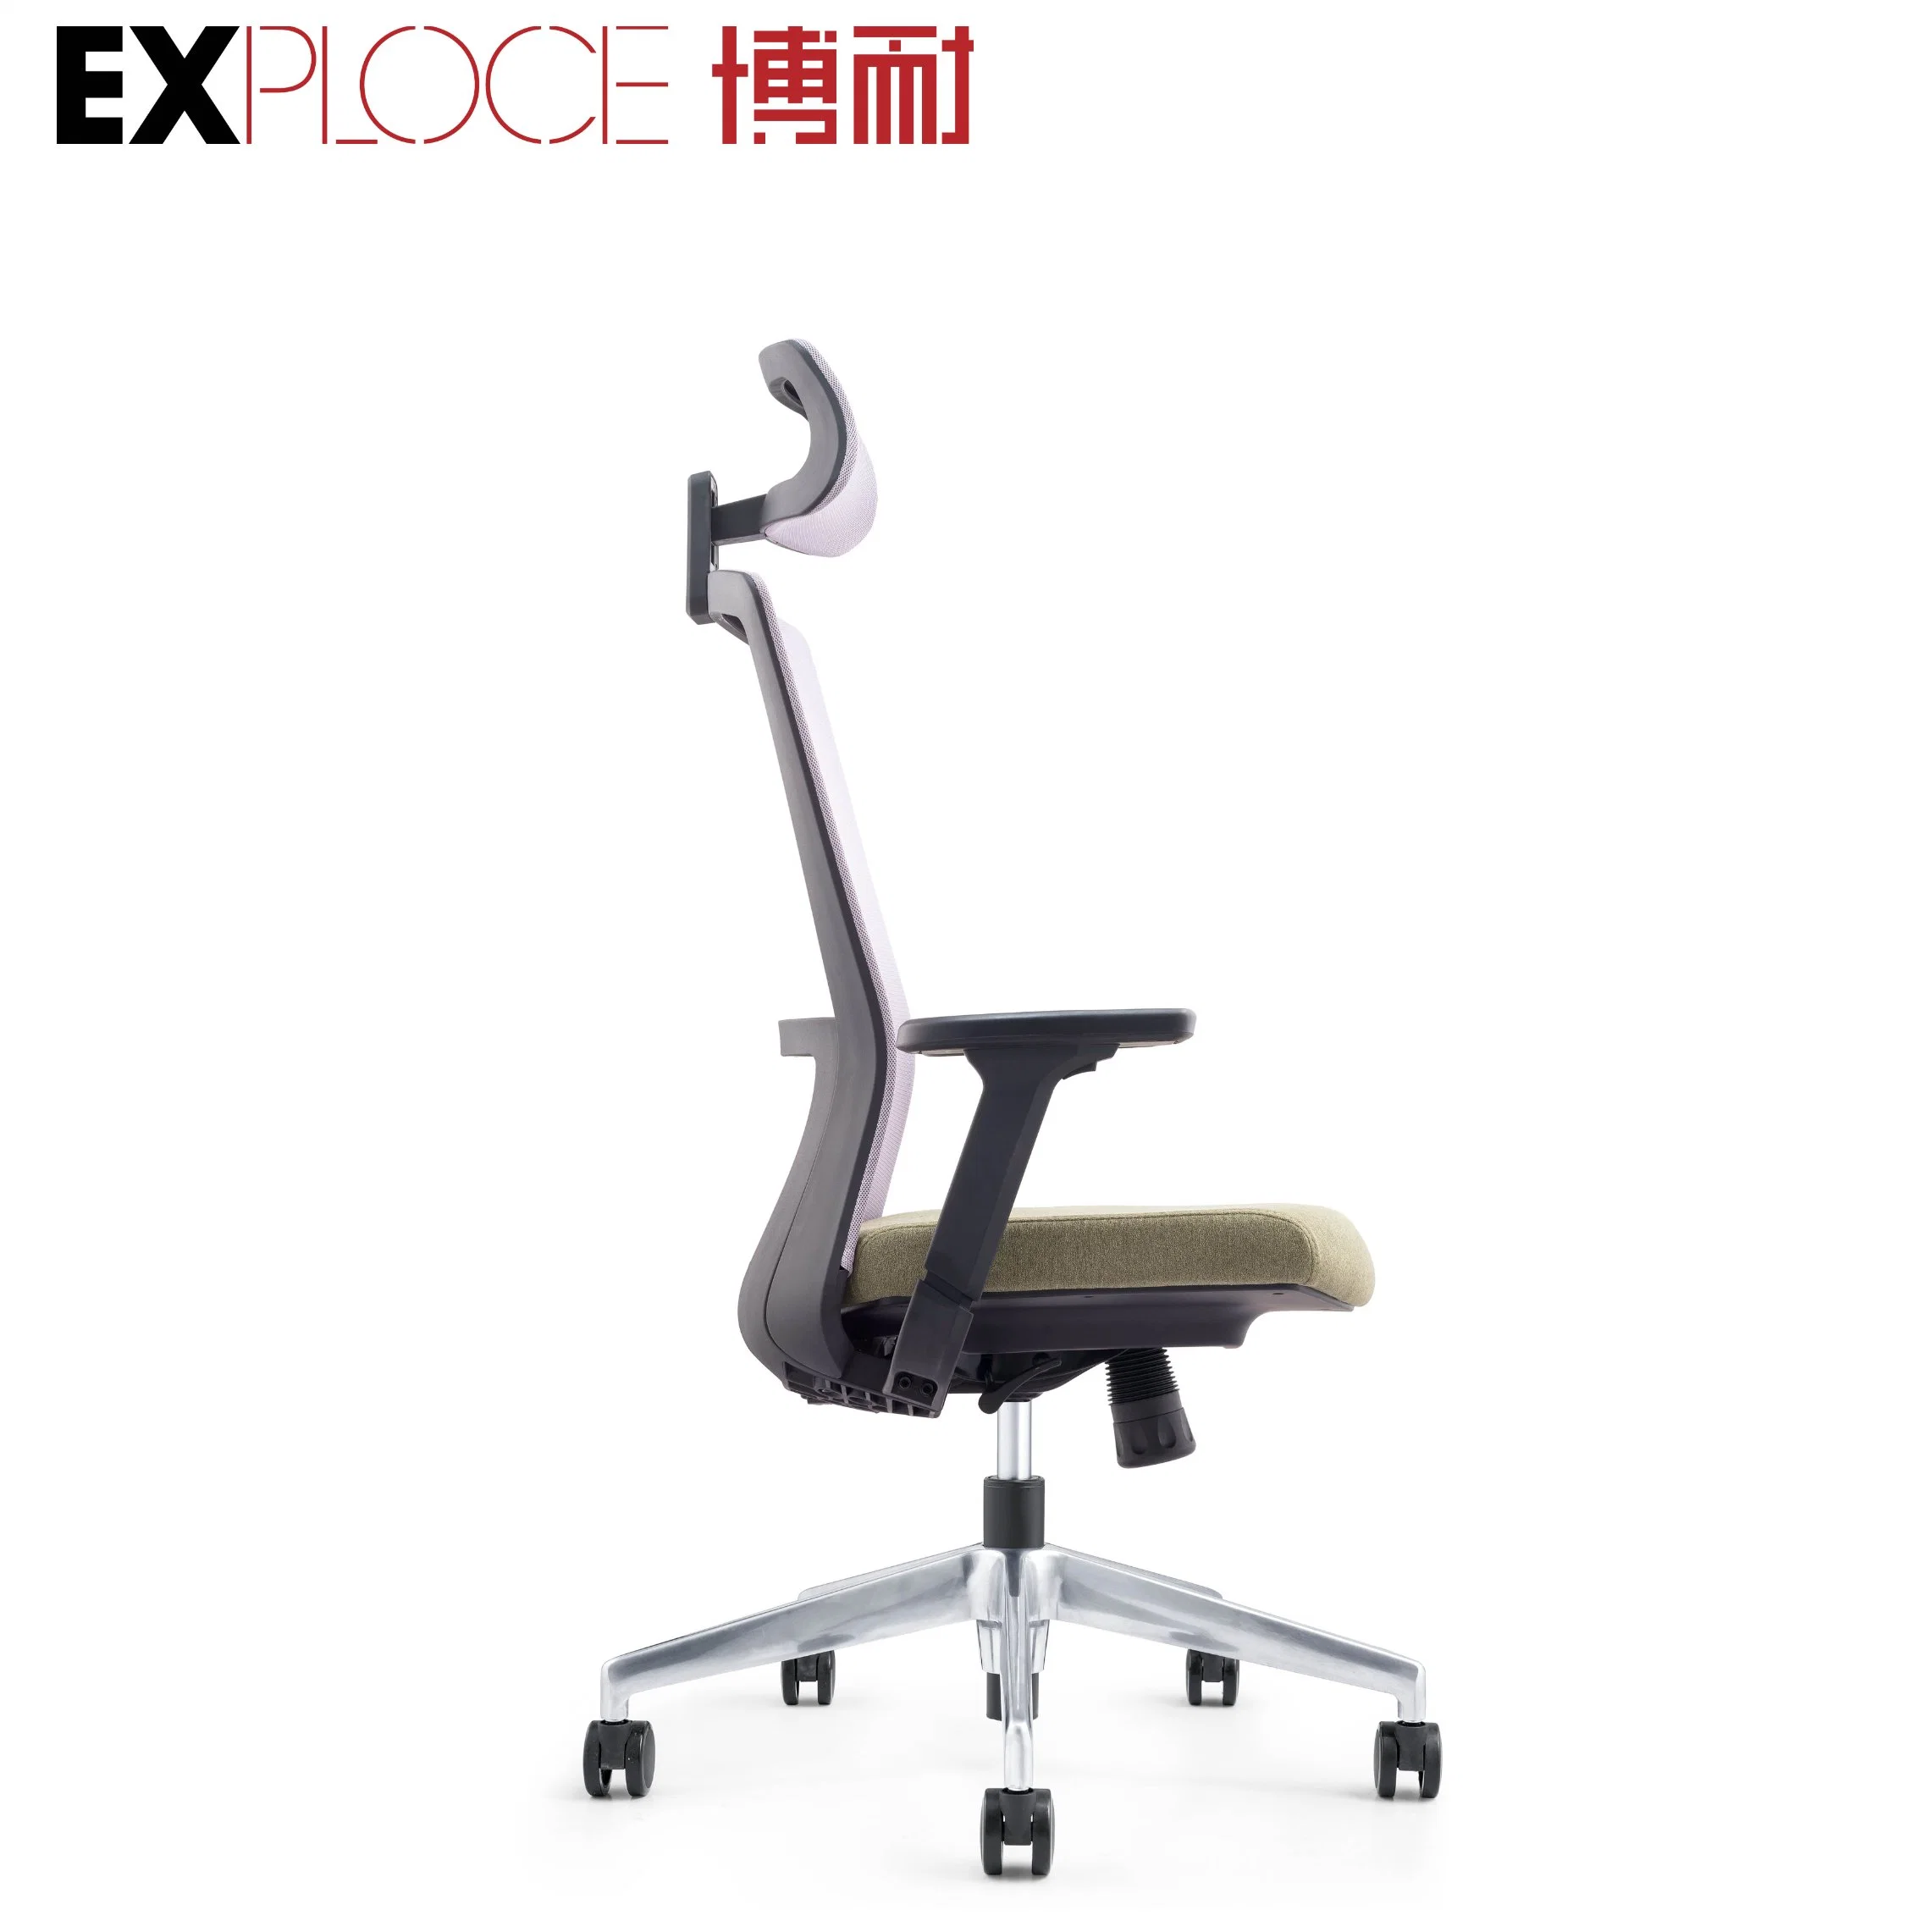 Lumbar Support Mesh High Back Executive Swivel Ergonomic Office Chair Furniture